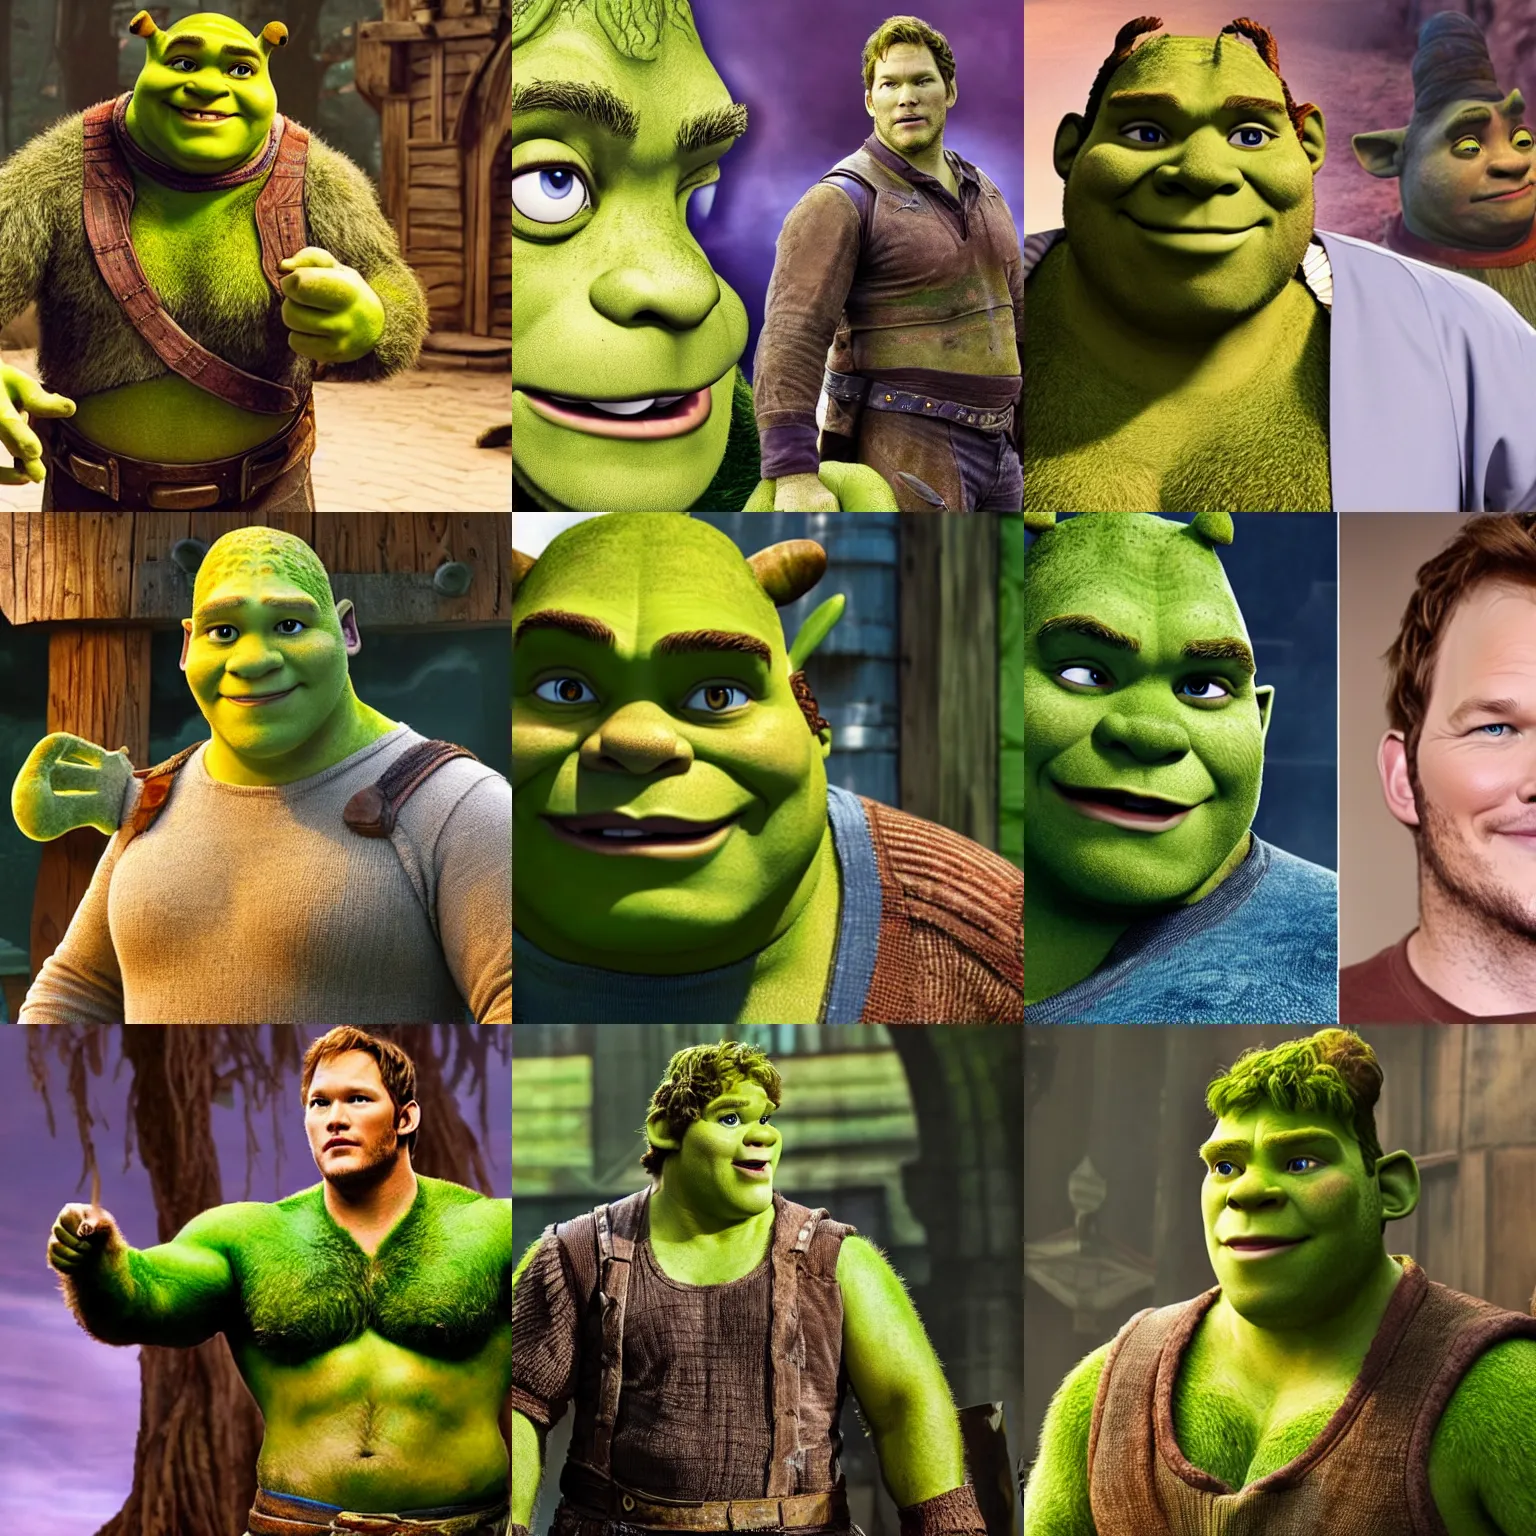 Prompt: Chris Pratt as Shrek, live action set photograph